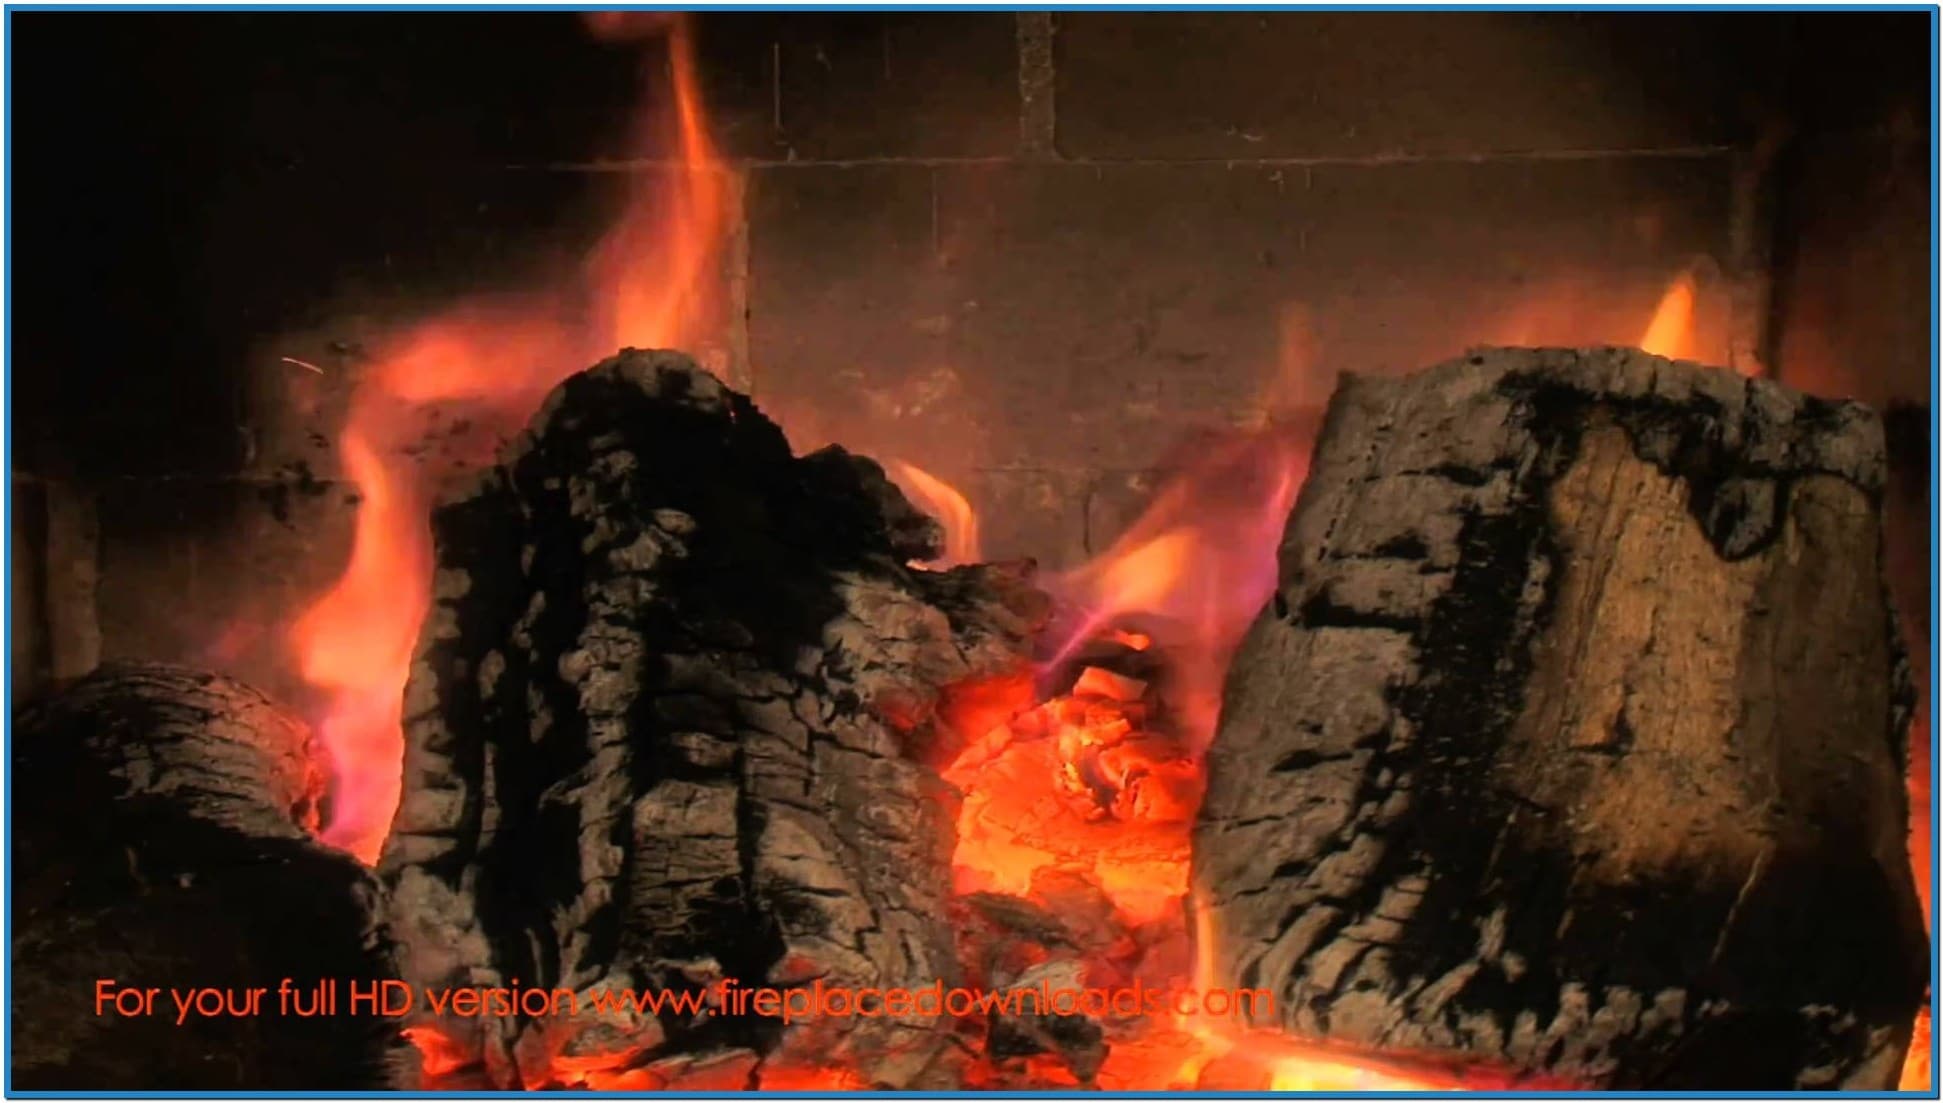 Burning Log Fire Screensaver Mac